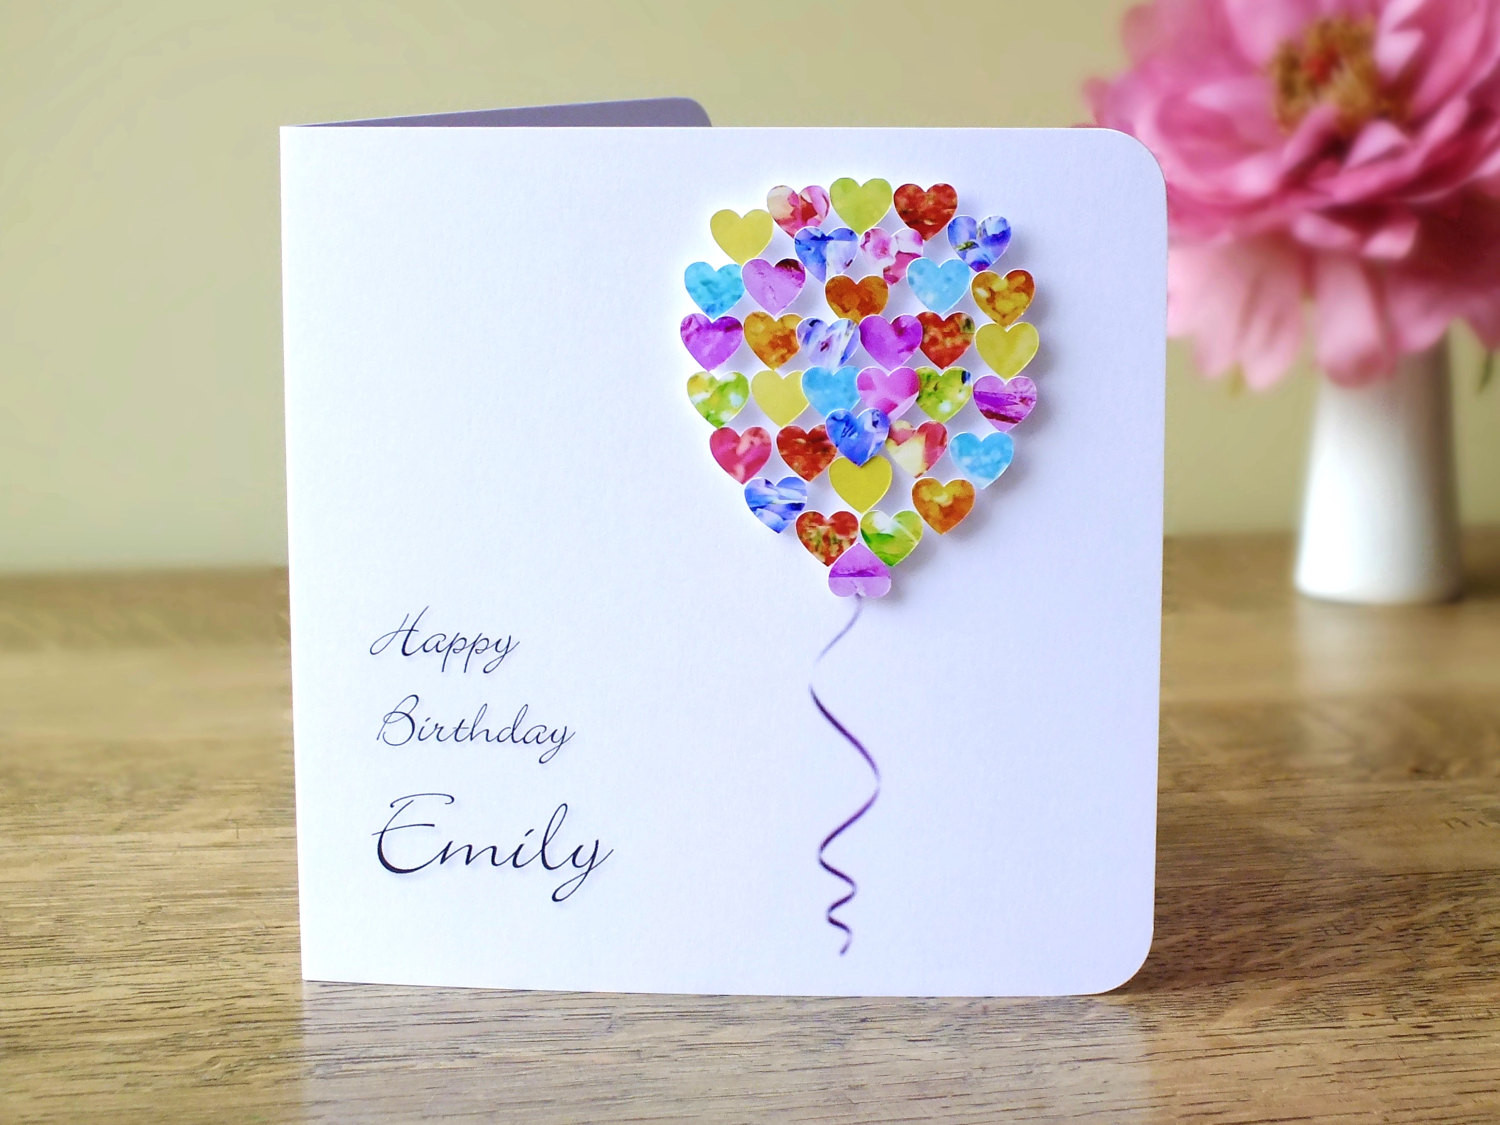 diy-birthday-cards-for-dad-grandpa-birthday-card-birthday-card-puns-happy-birthday-cards